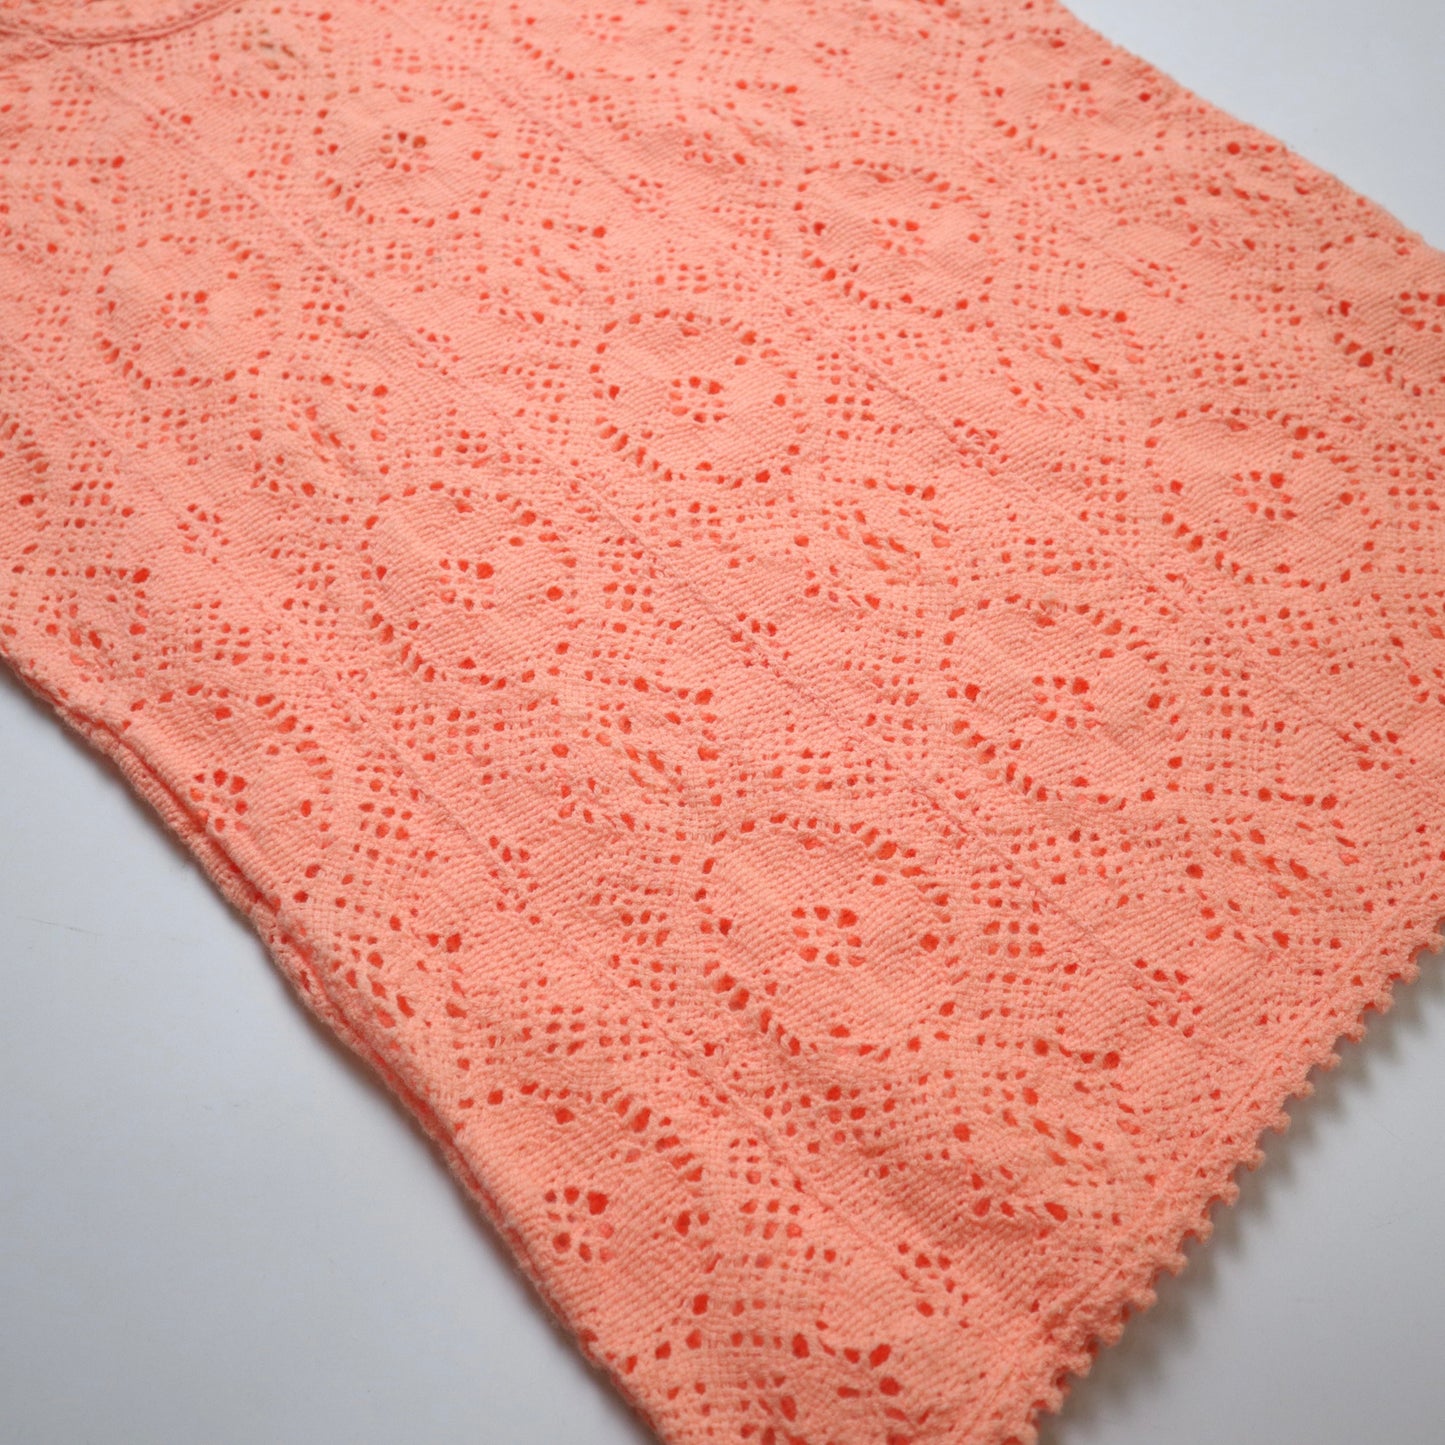 60-70s Kmart 日本製 橘色勾針背心 針織背心